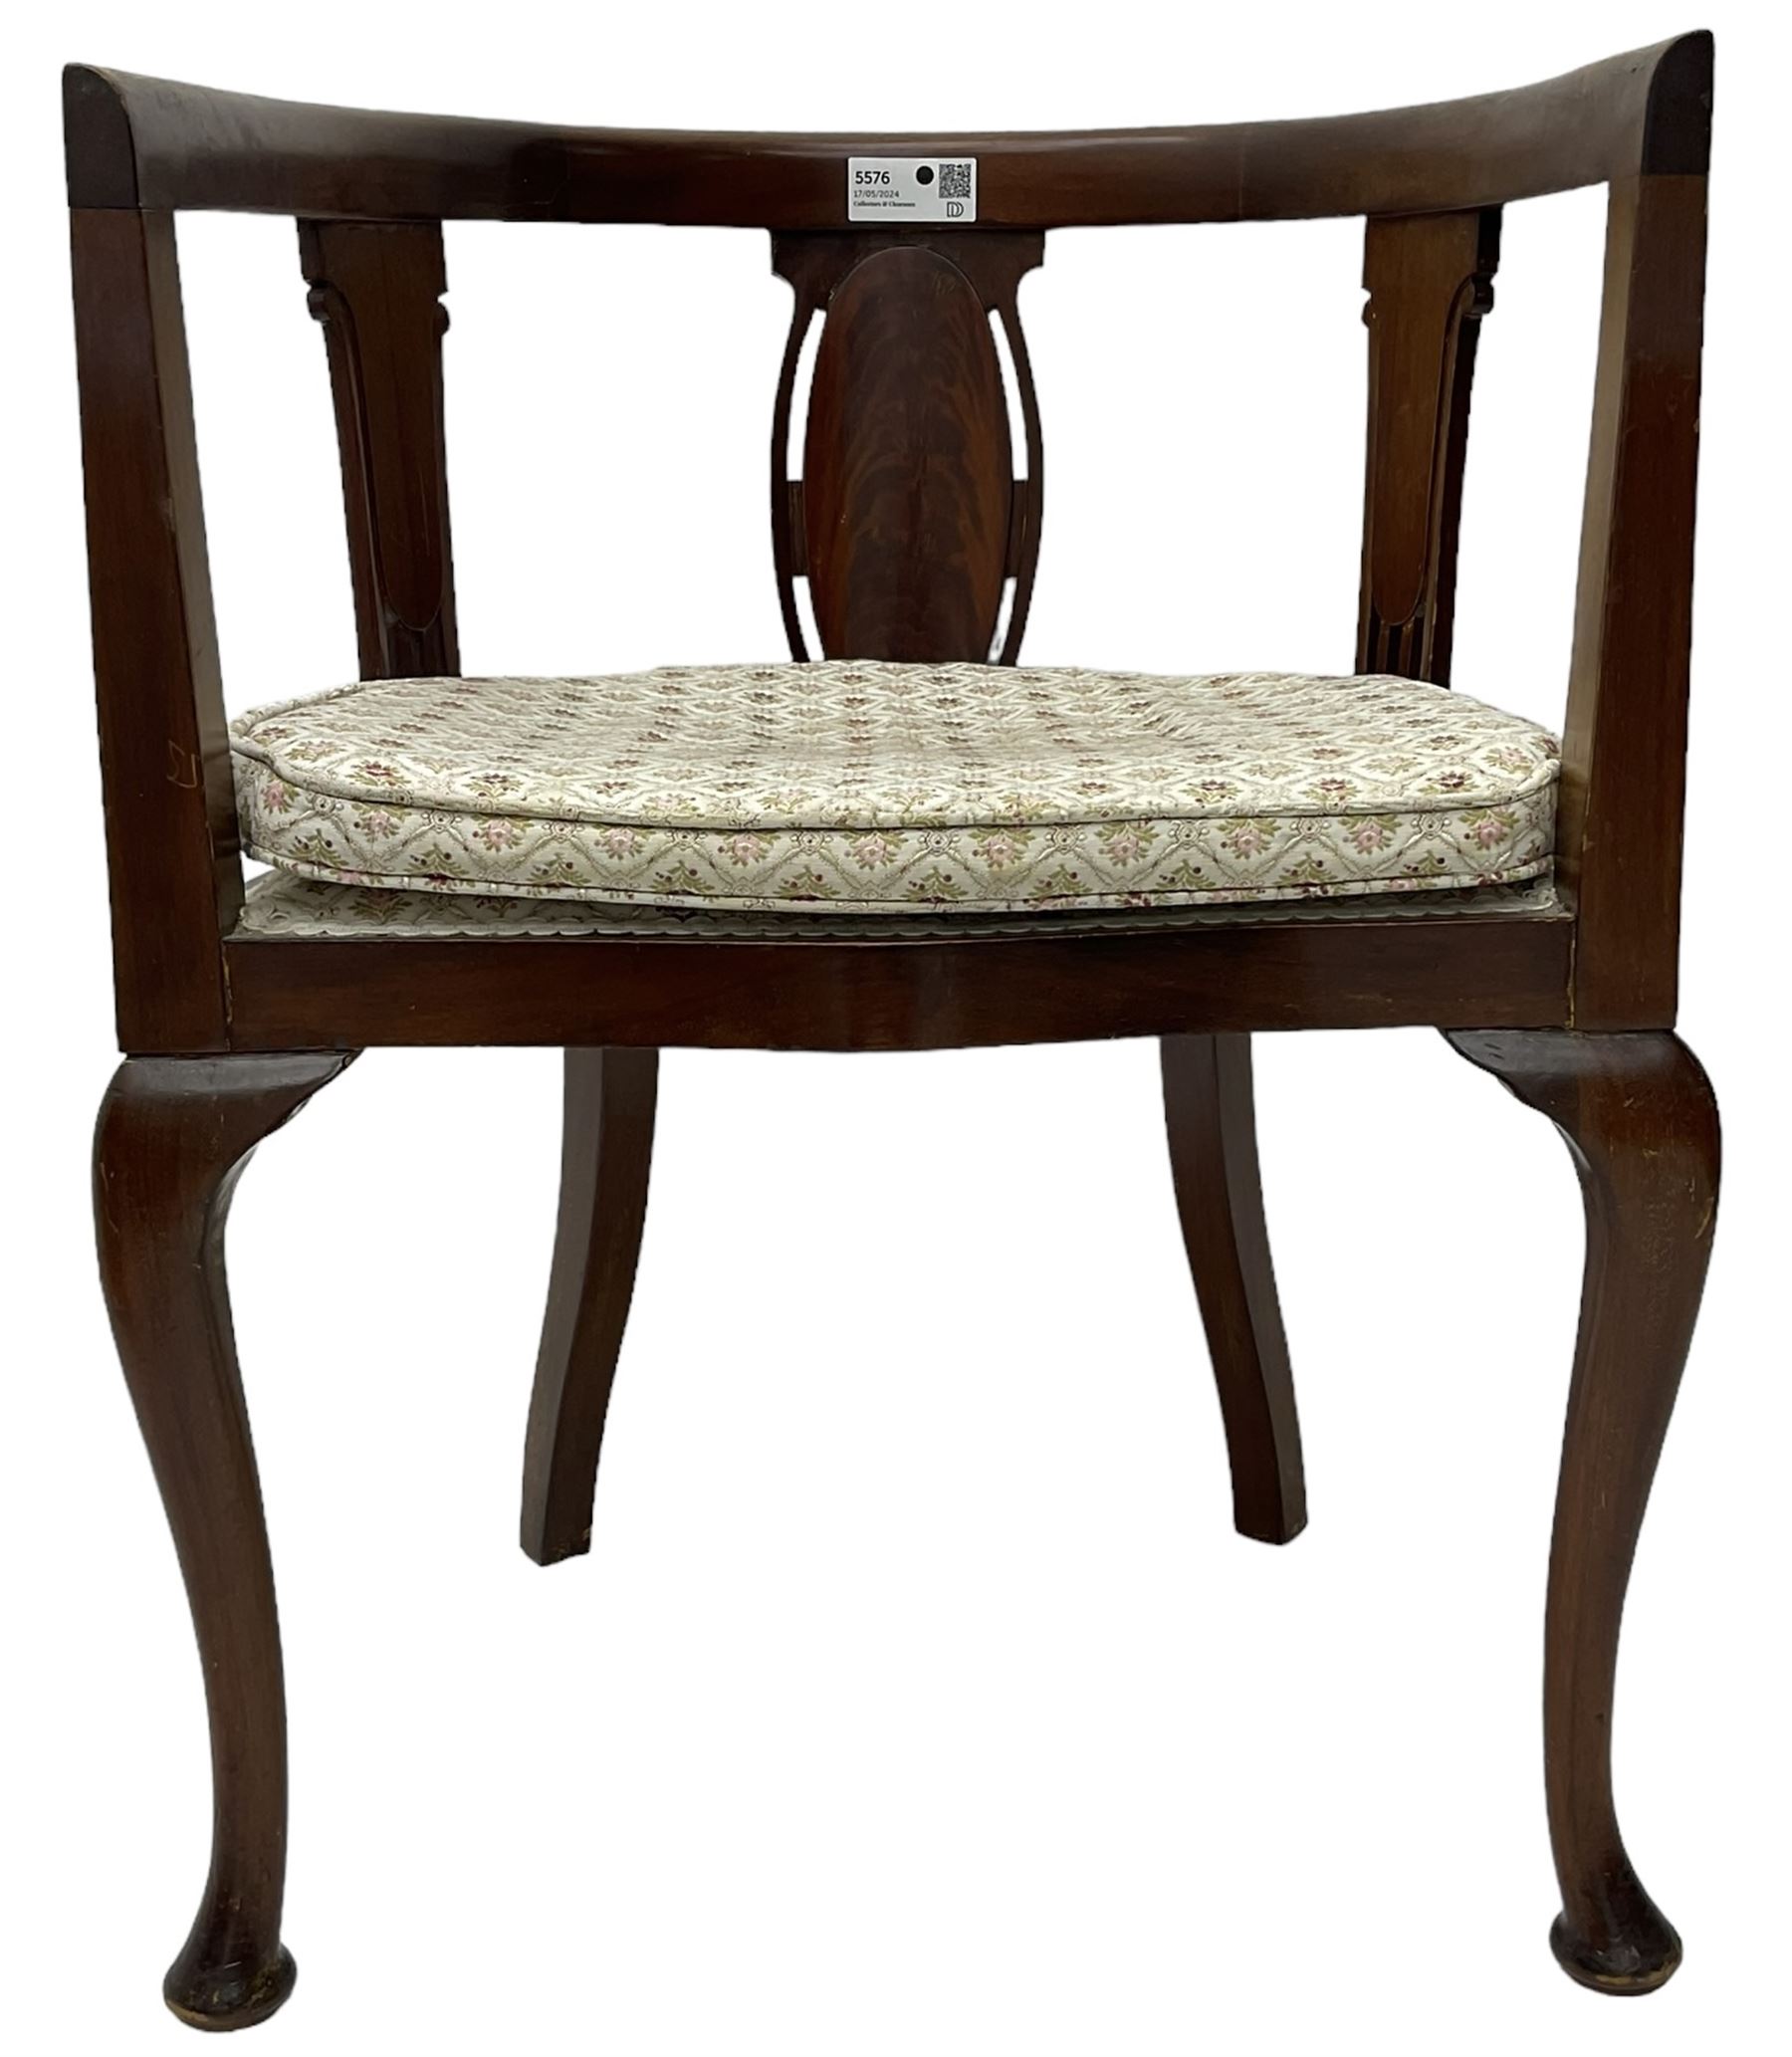 Early 20th century mahogany tub shaped chair